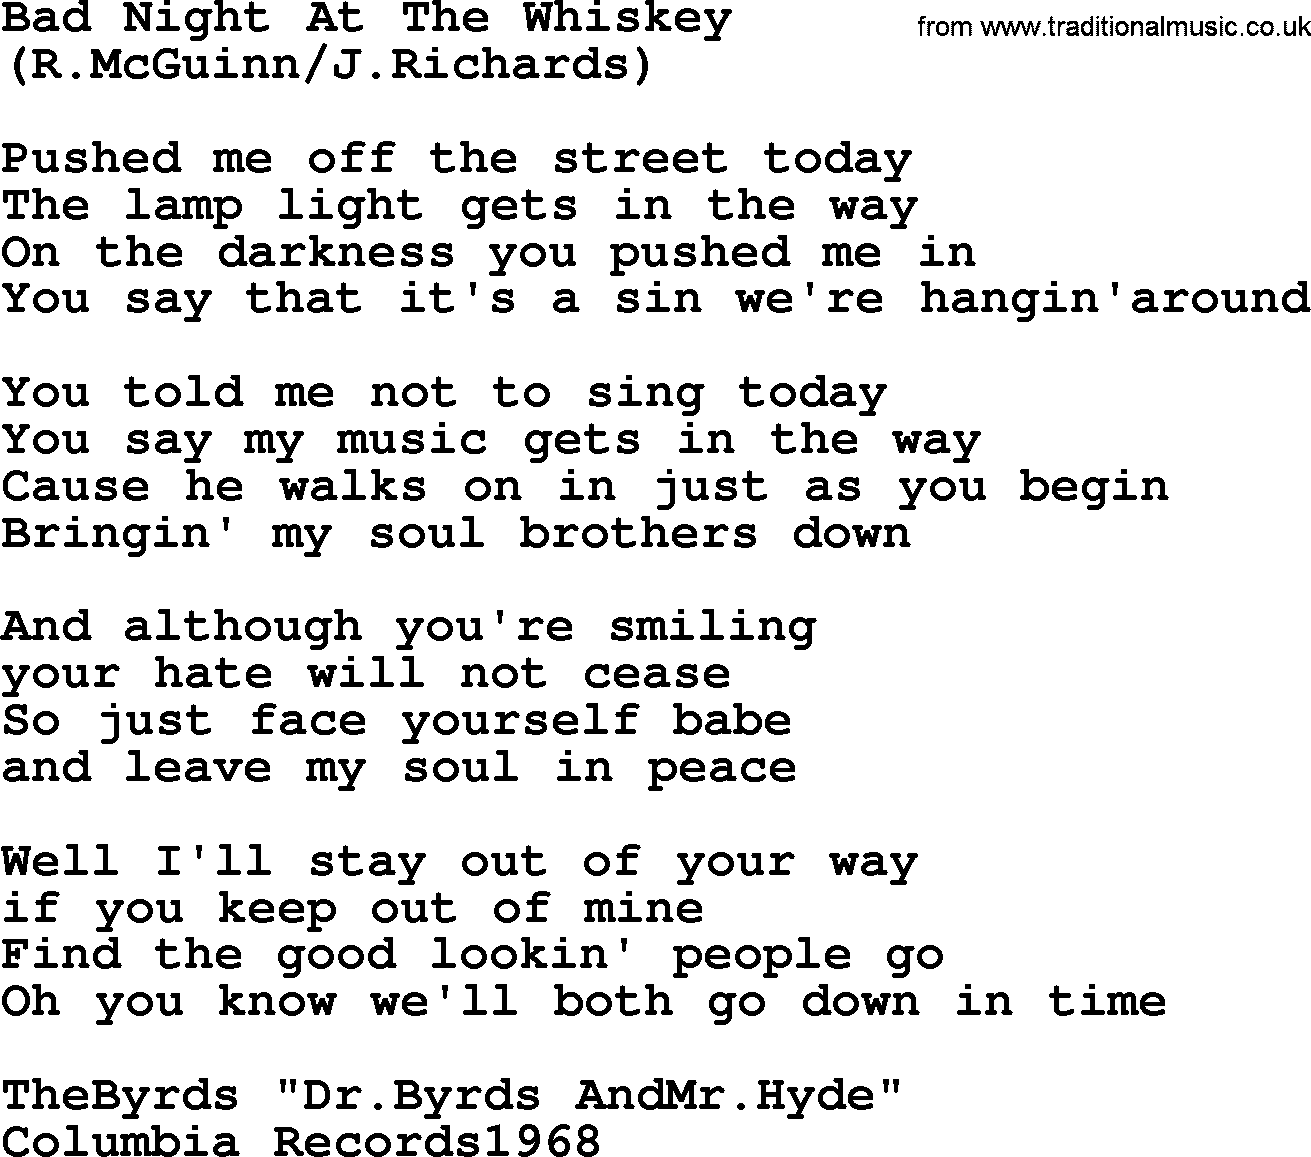 The Byrds song Bad Night At The Whiskey, lyrics